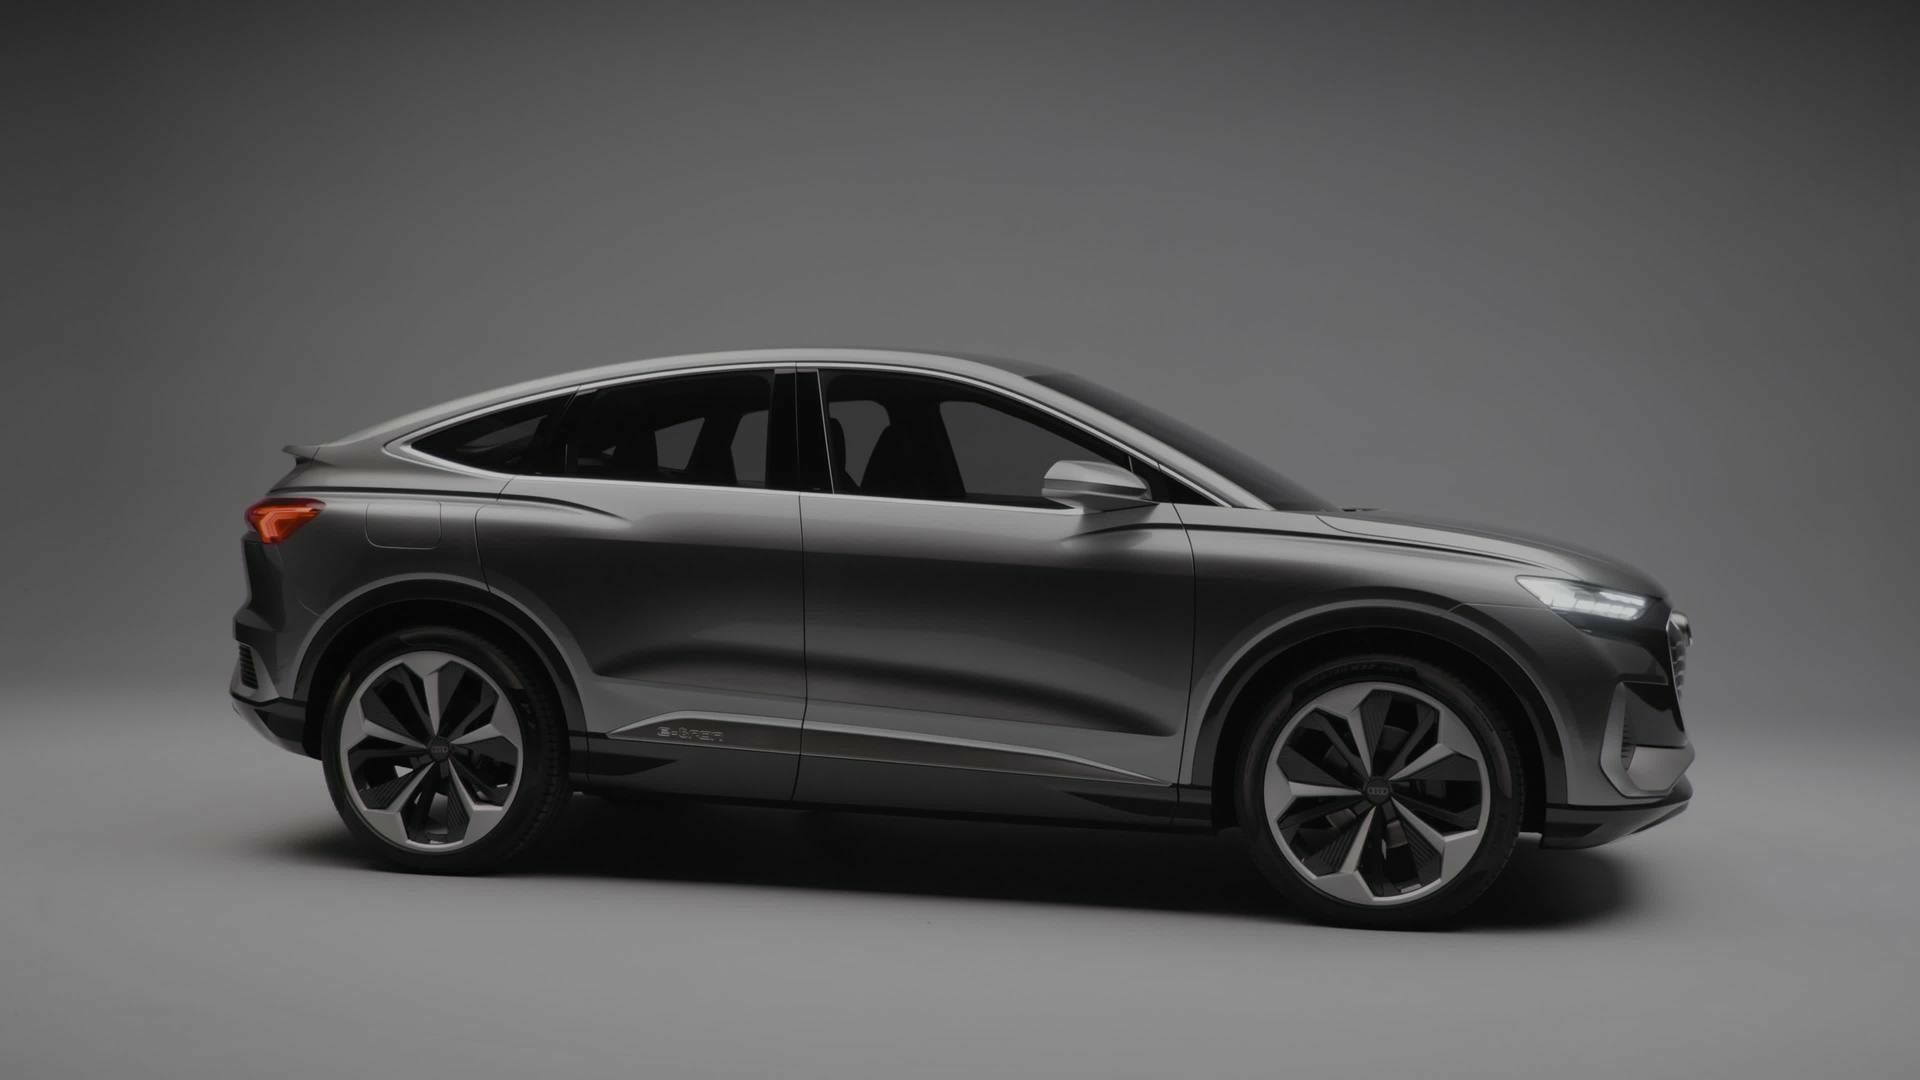 Defined Dynamics – the design of the Audi Q4 e-tron Sportback concept